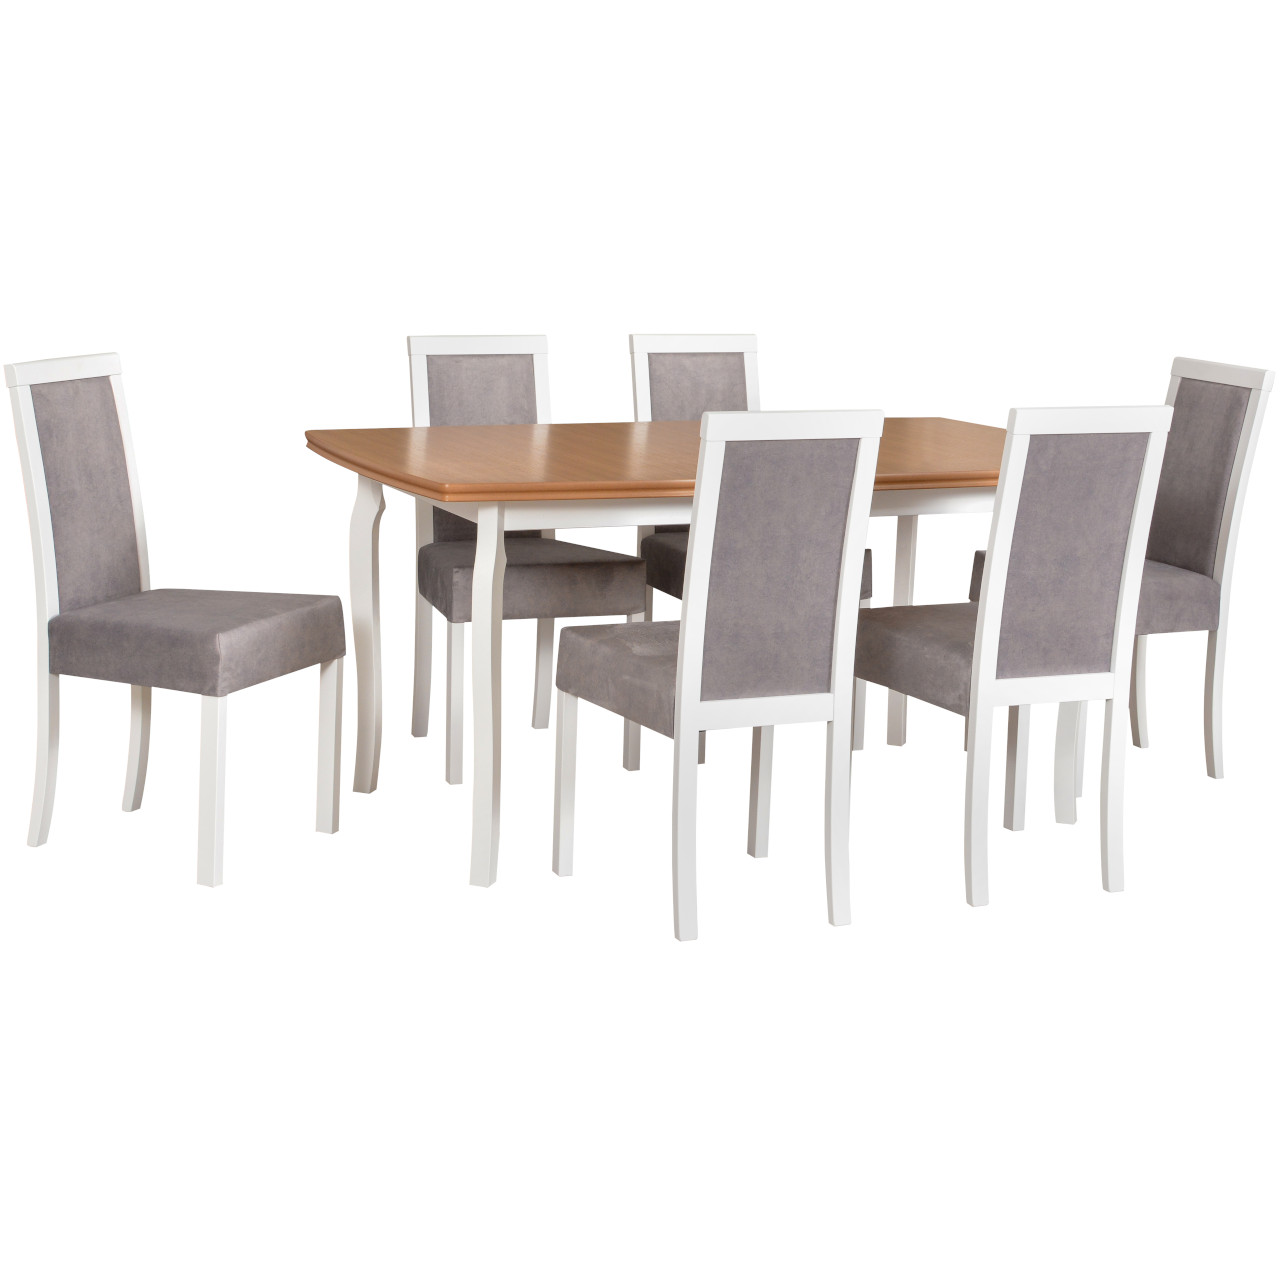 Table KENT 1 oak veneer / white + chairs ROMA 3 (6 pcs.) white / 20B